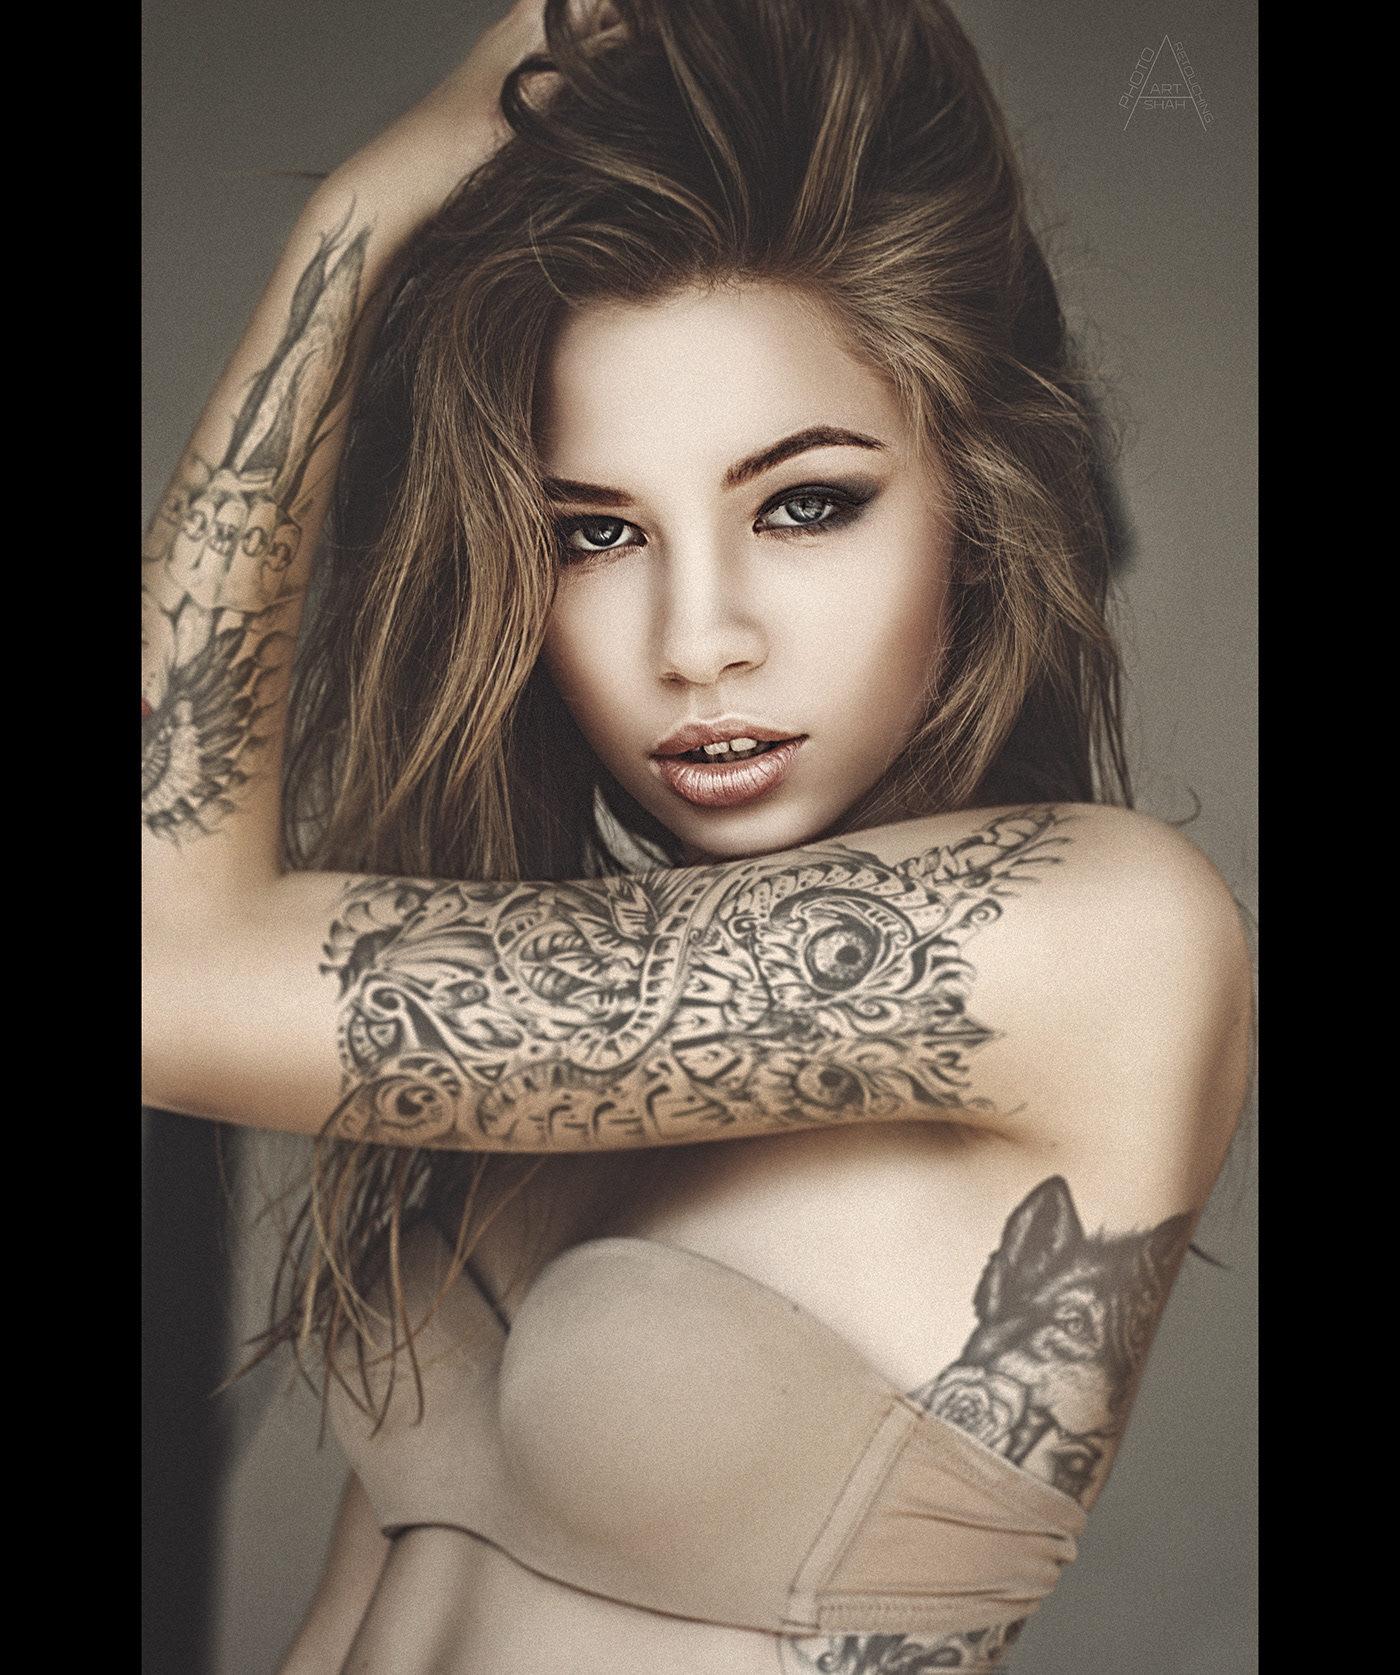 Pretty tattooed girl on Behance